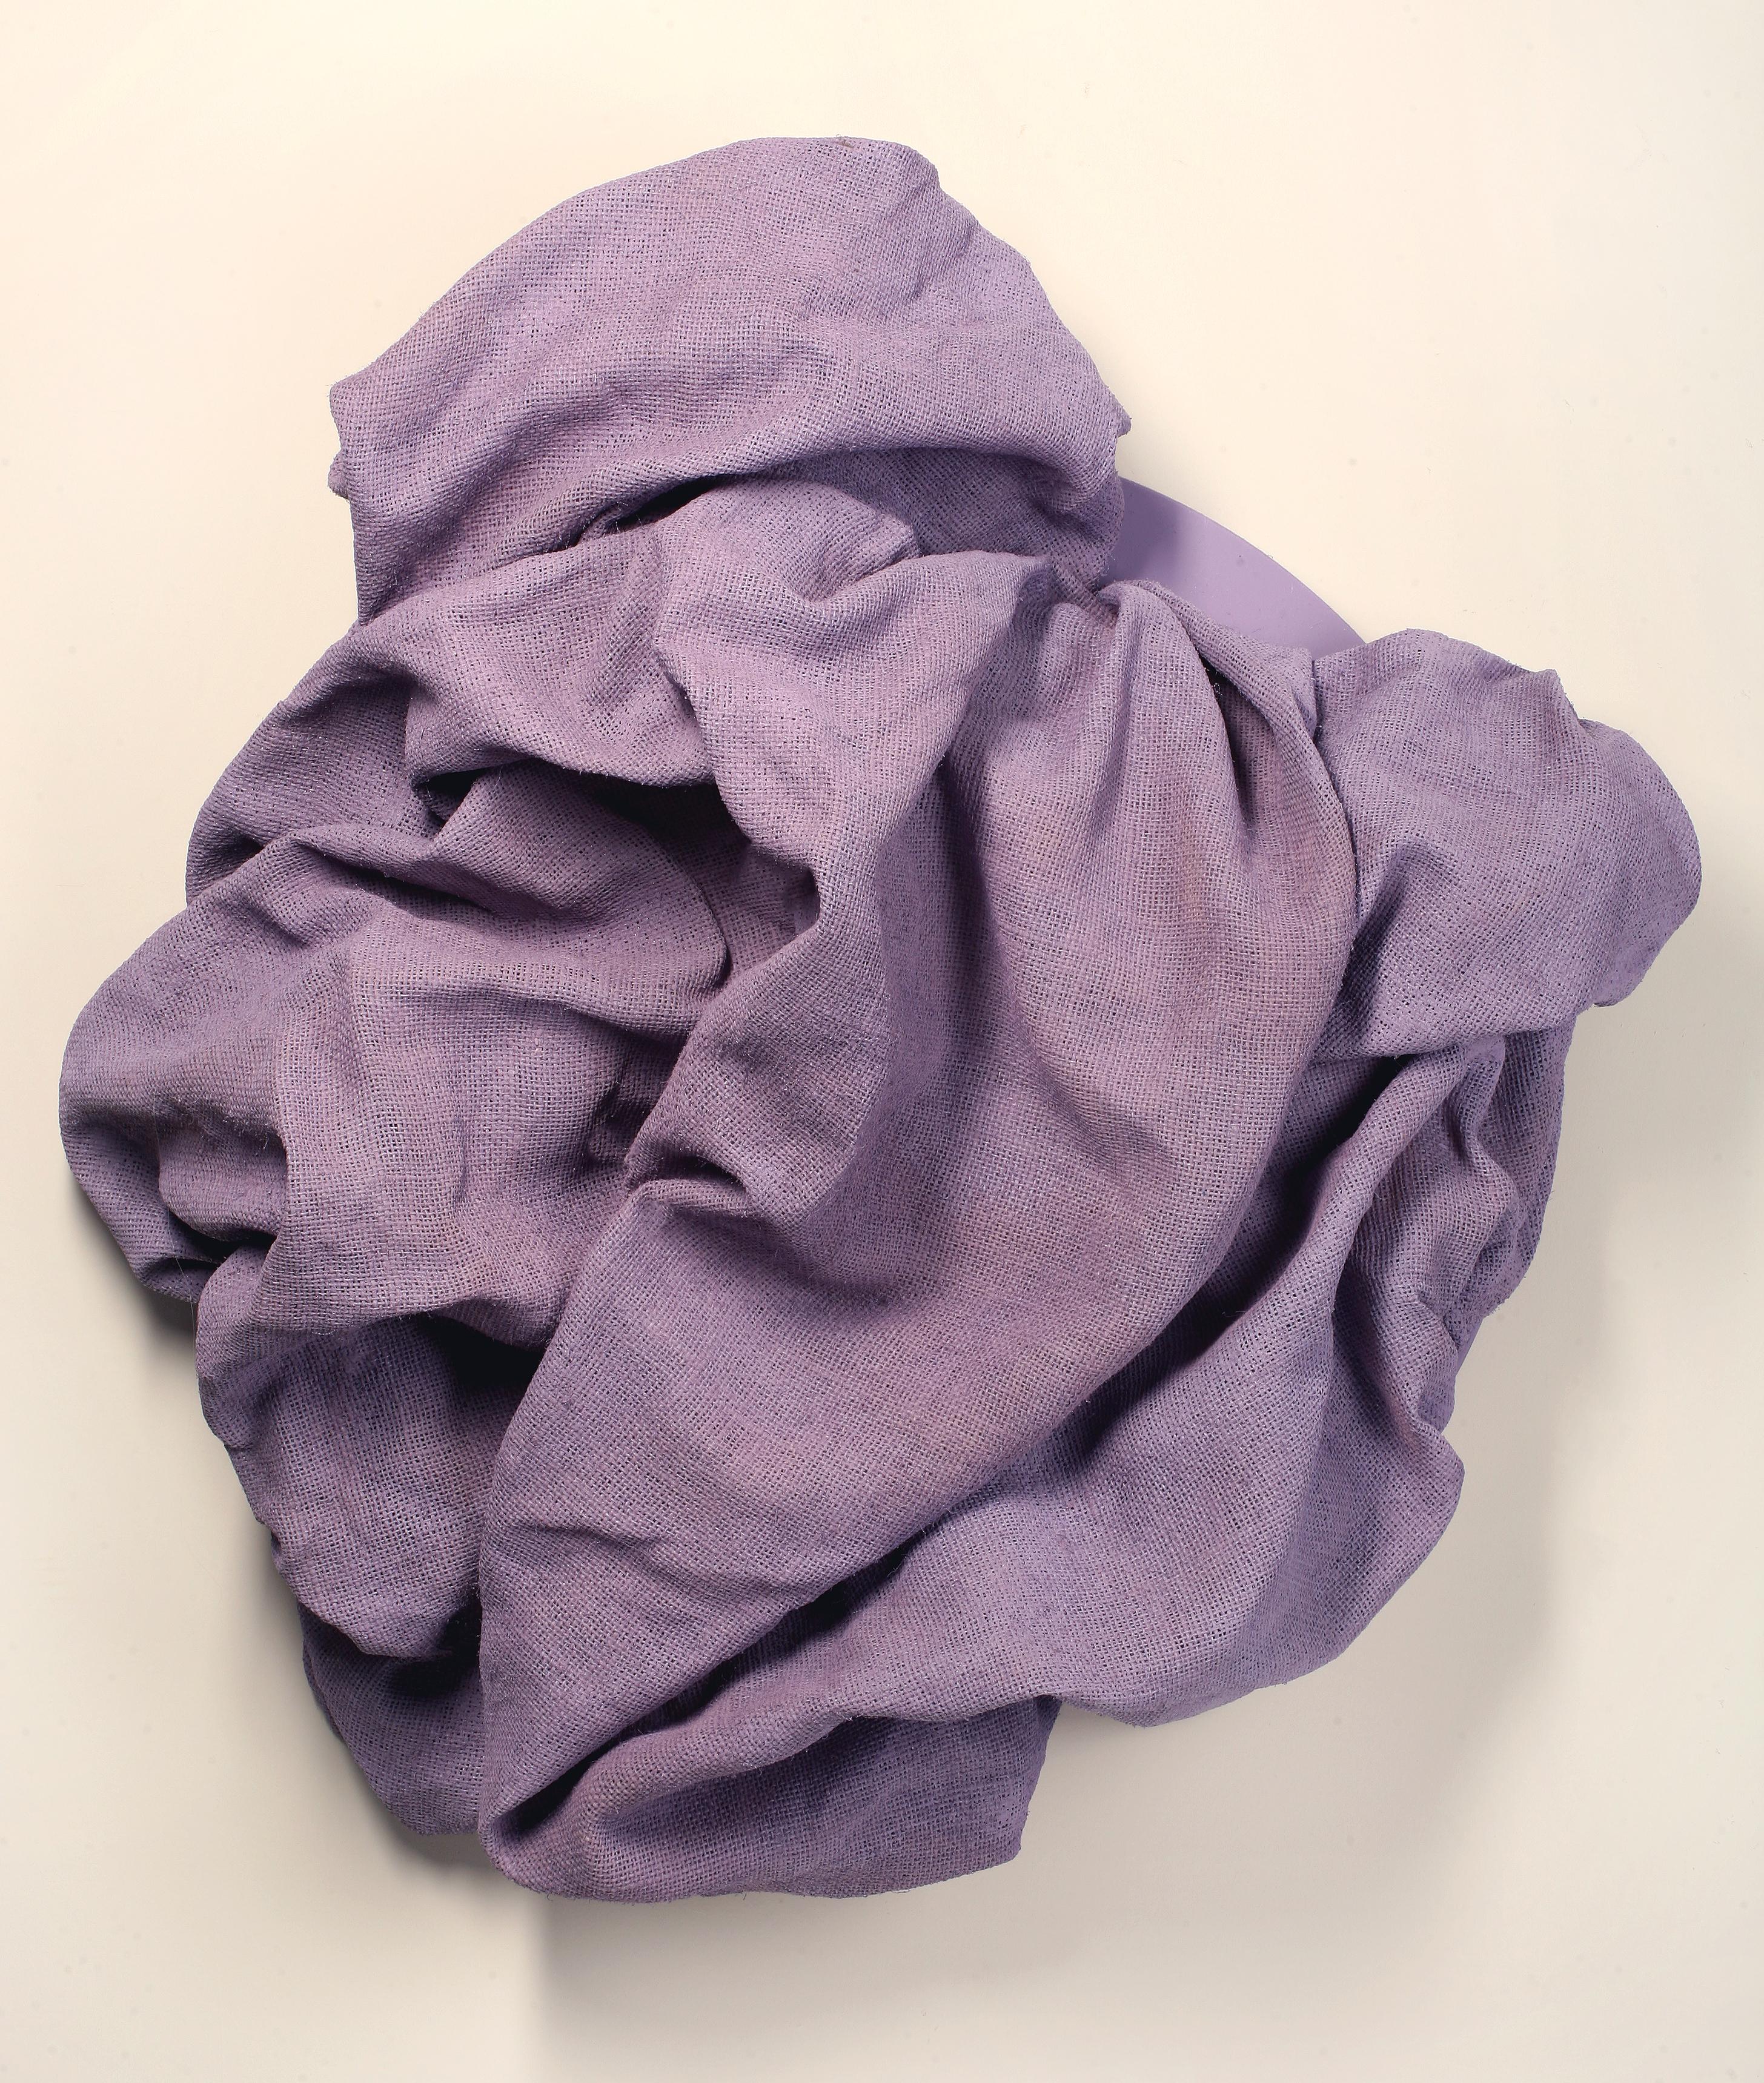 Chloe Hedden Abstract Sculpture – „Lavender Folds“ Wandskulptur – Stoff, monochrom, lila